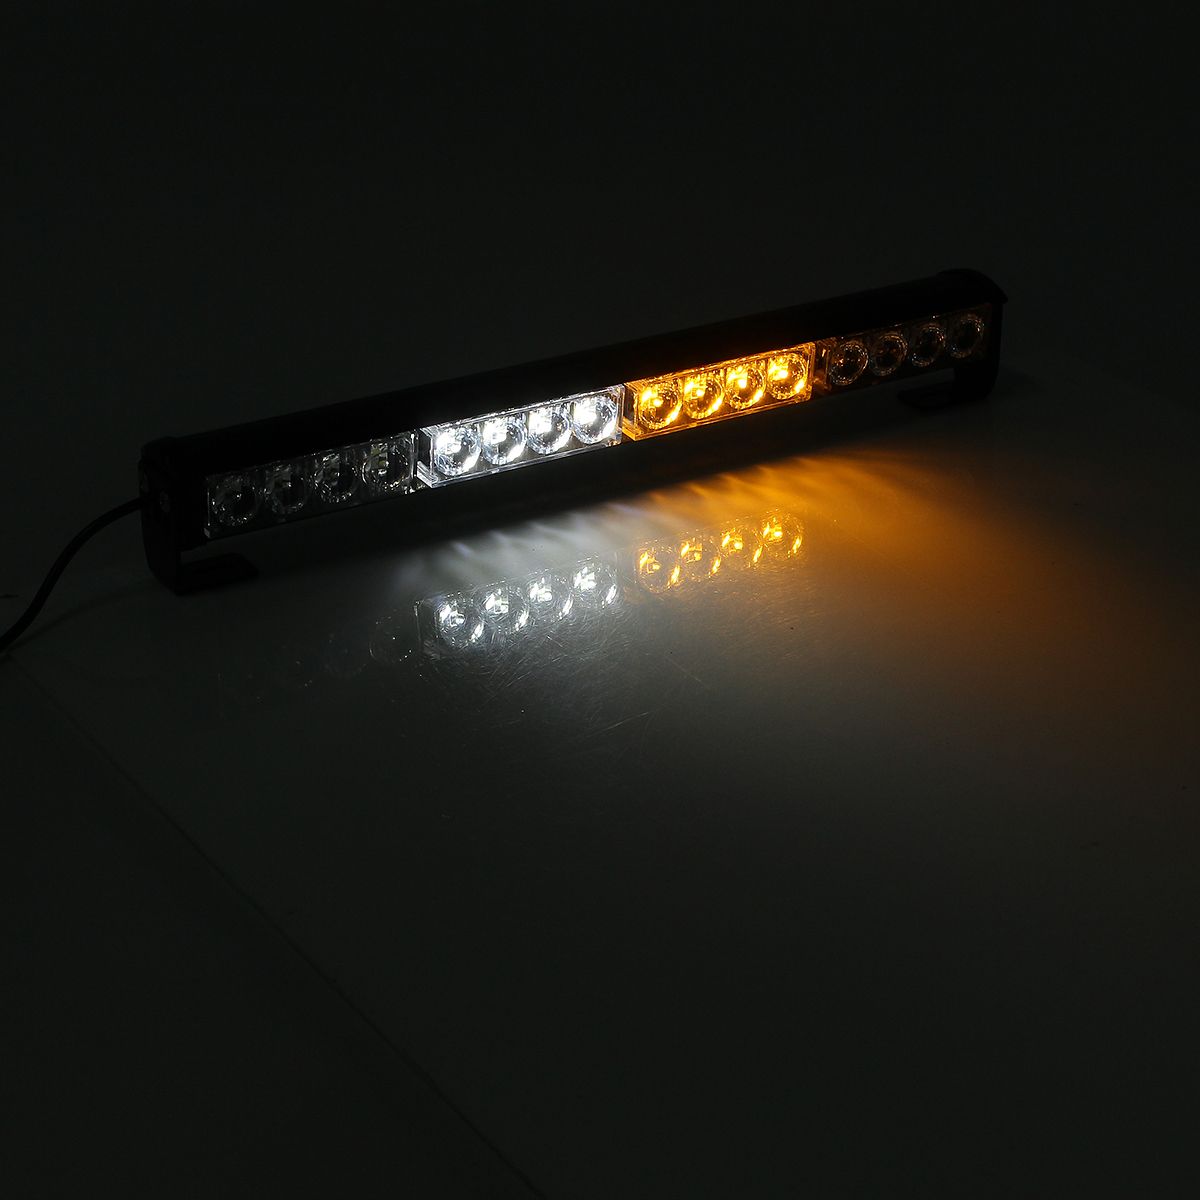 18Inch-16LED-Emergency-Traffic-Advisor-Flash-Strobe-Light-Bar-Warning-Lamp-WhiteAmber-Color-with-Swi-1622045